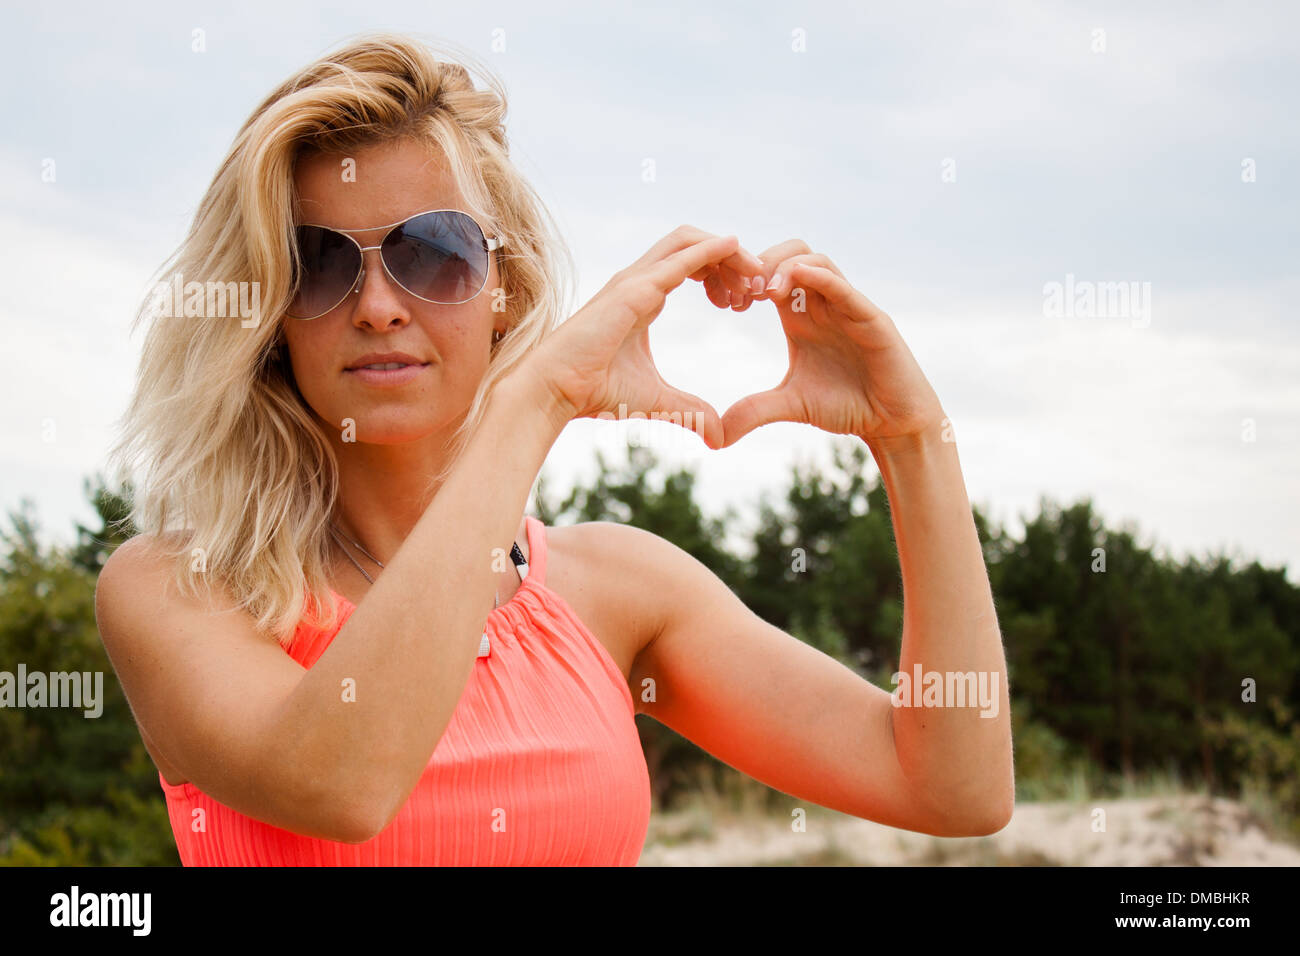 woman face portrait 'hands heart' 'hands heart shape' 'heart shape' 'woman sunglasses' overcast :gray sky' summer blond Stock Photo